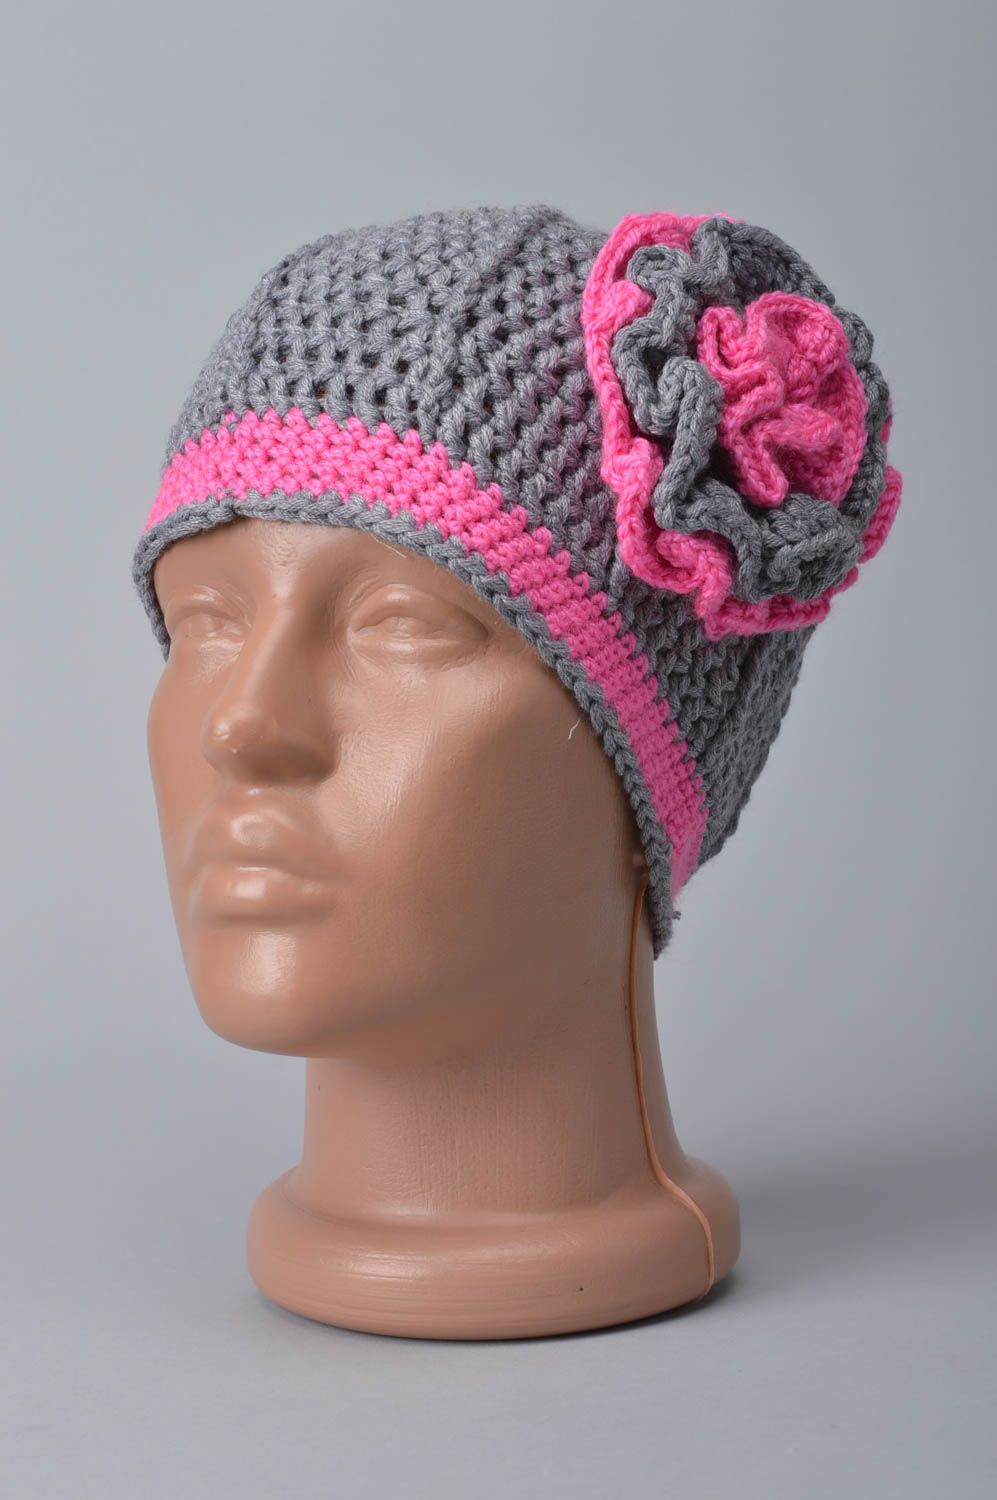 Handmade crochet baby hat kids winter hats kids accessories gifts for children photo 1